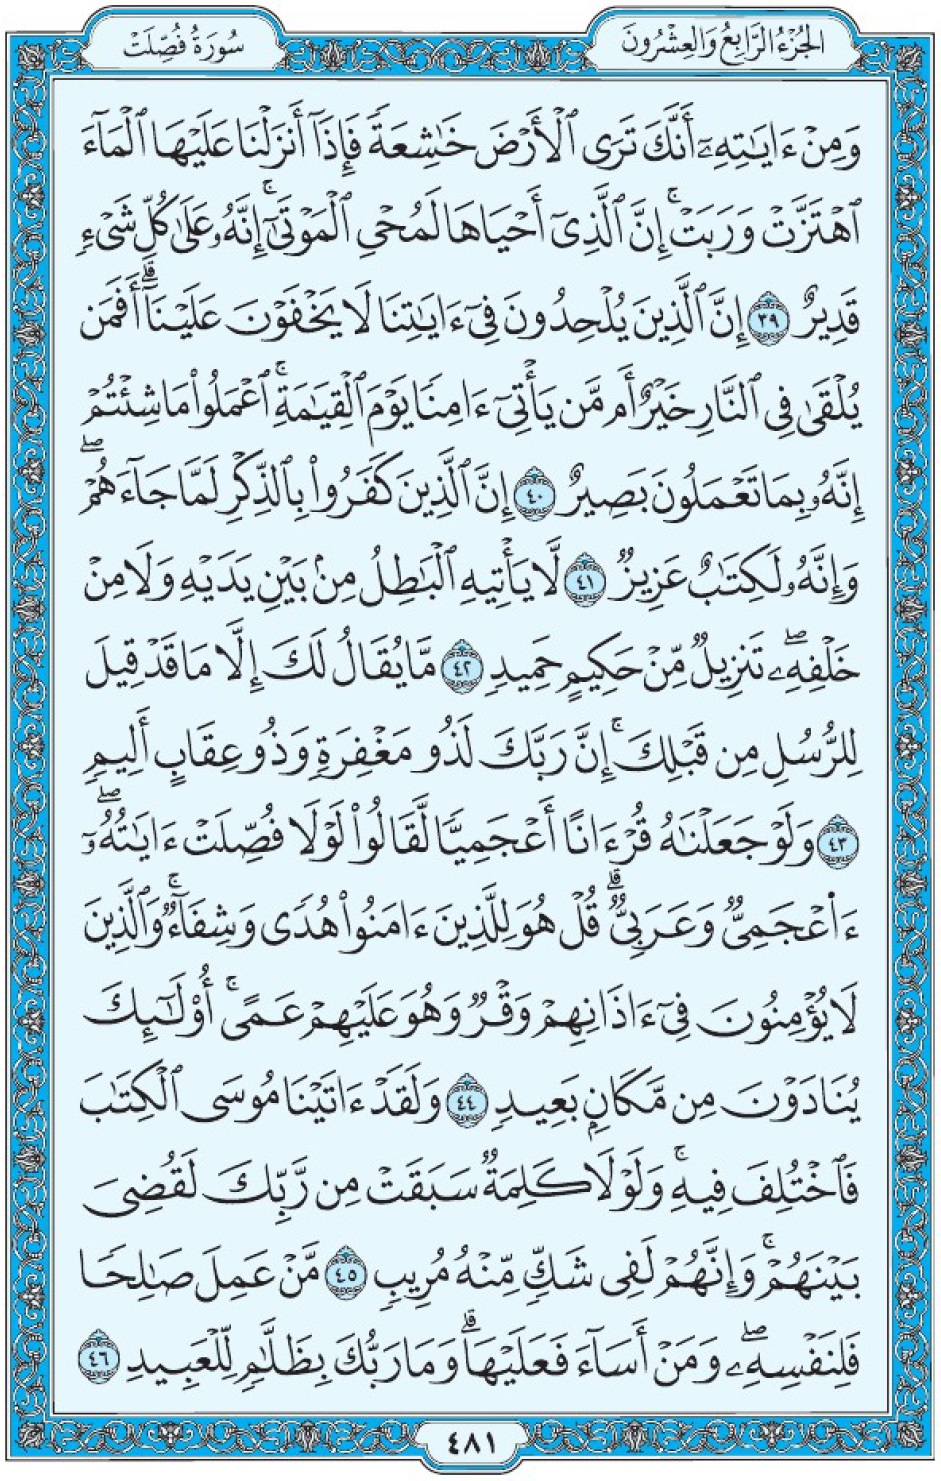 Коран Мединский мусхаф страница 481, Фуссылят, аят 39-46